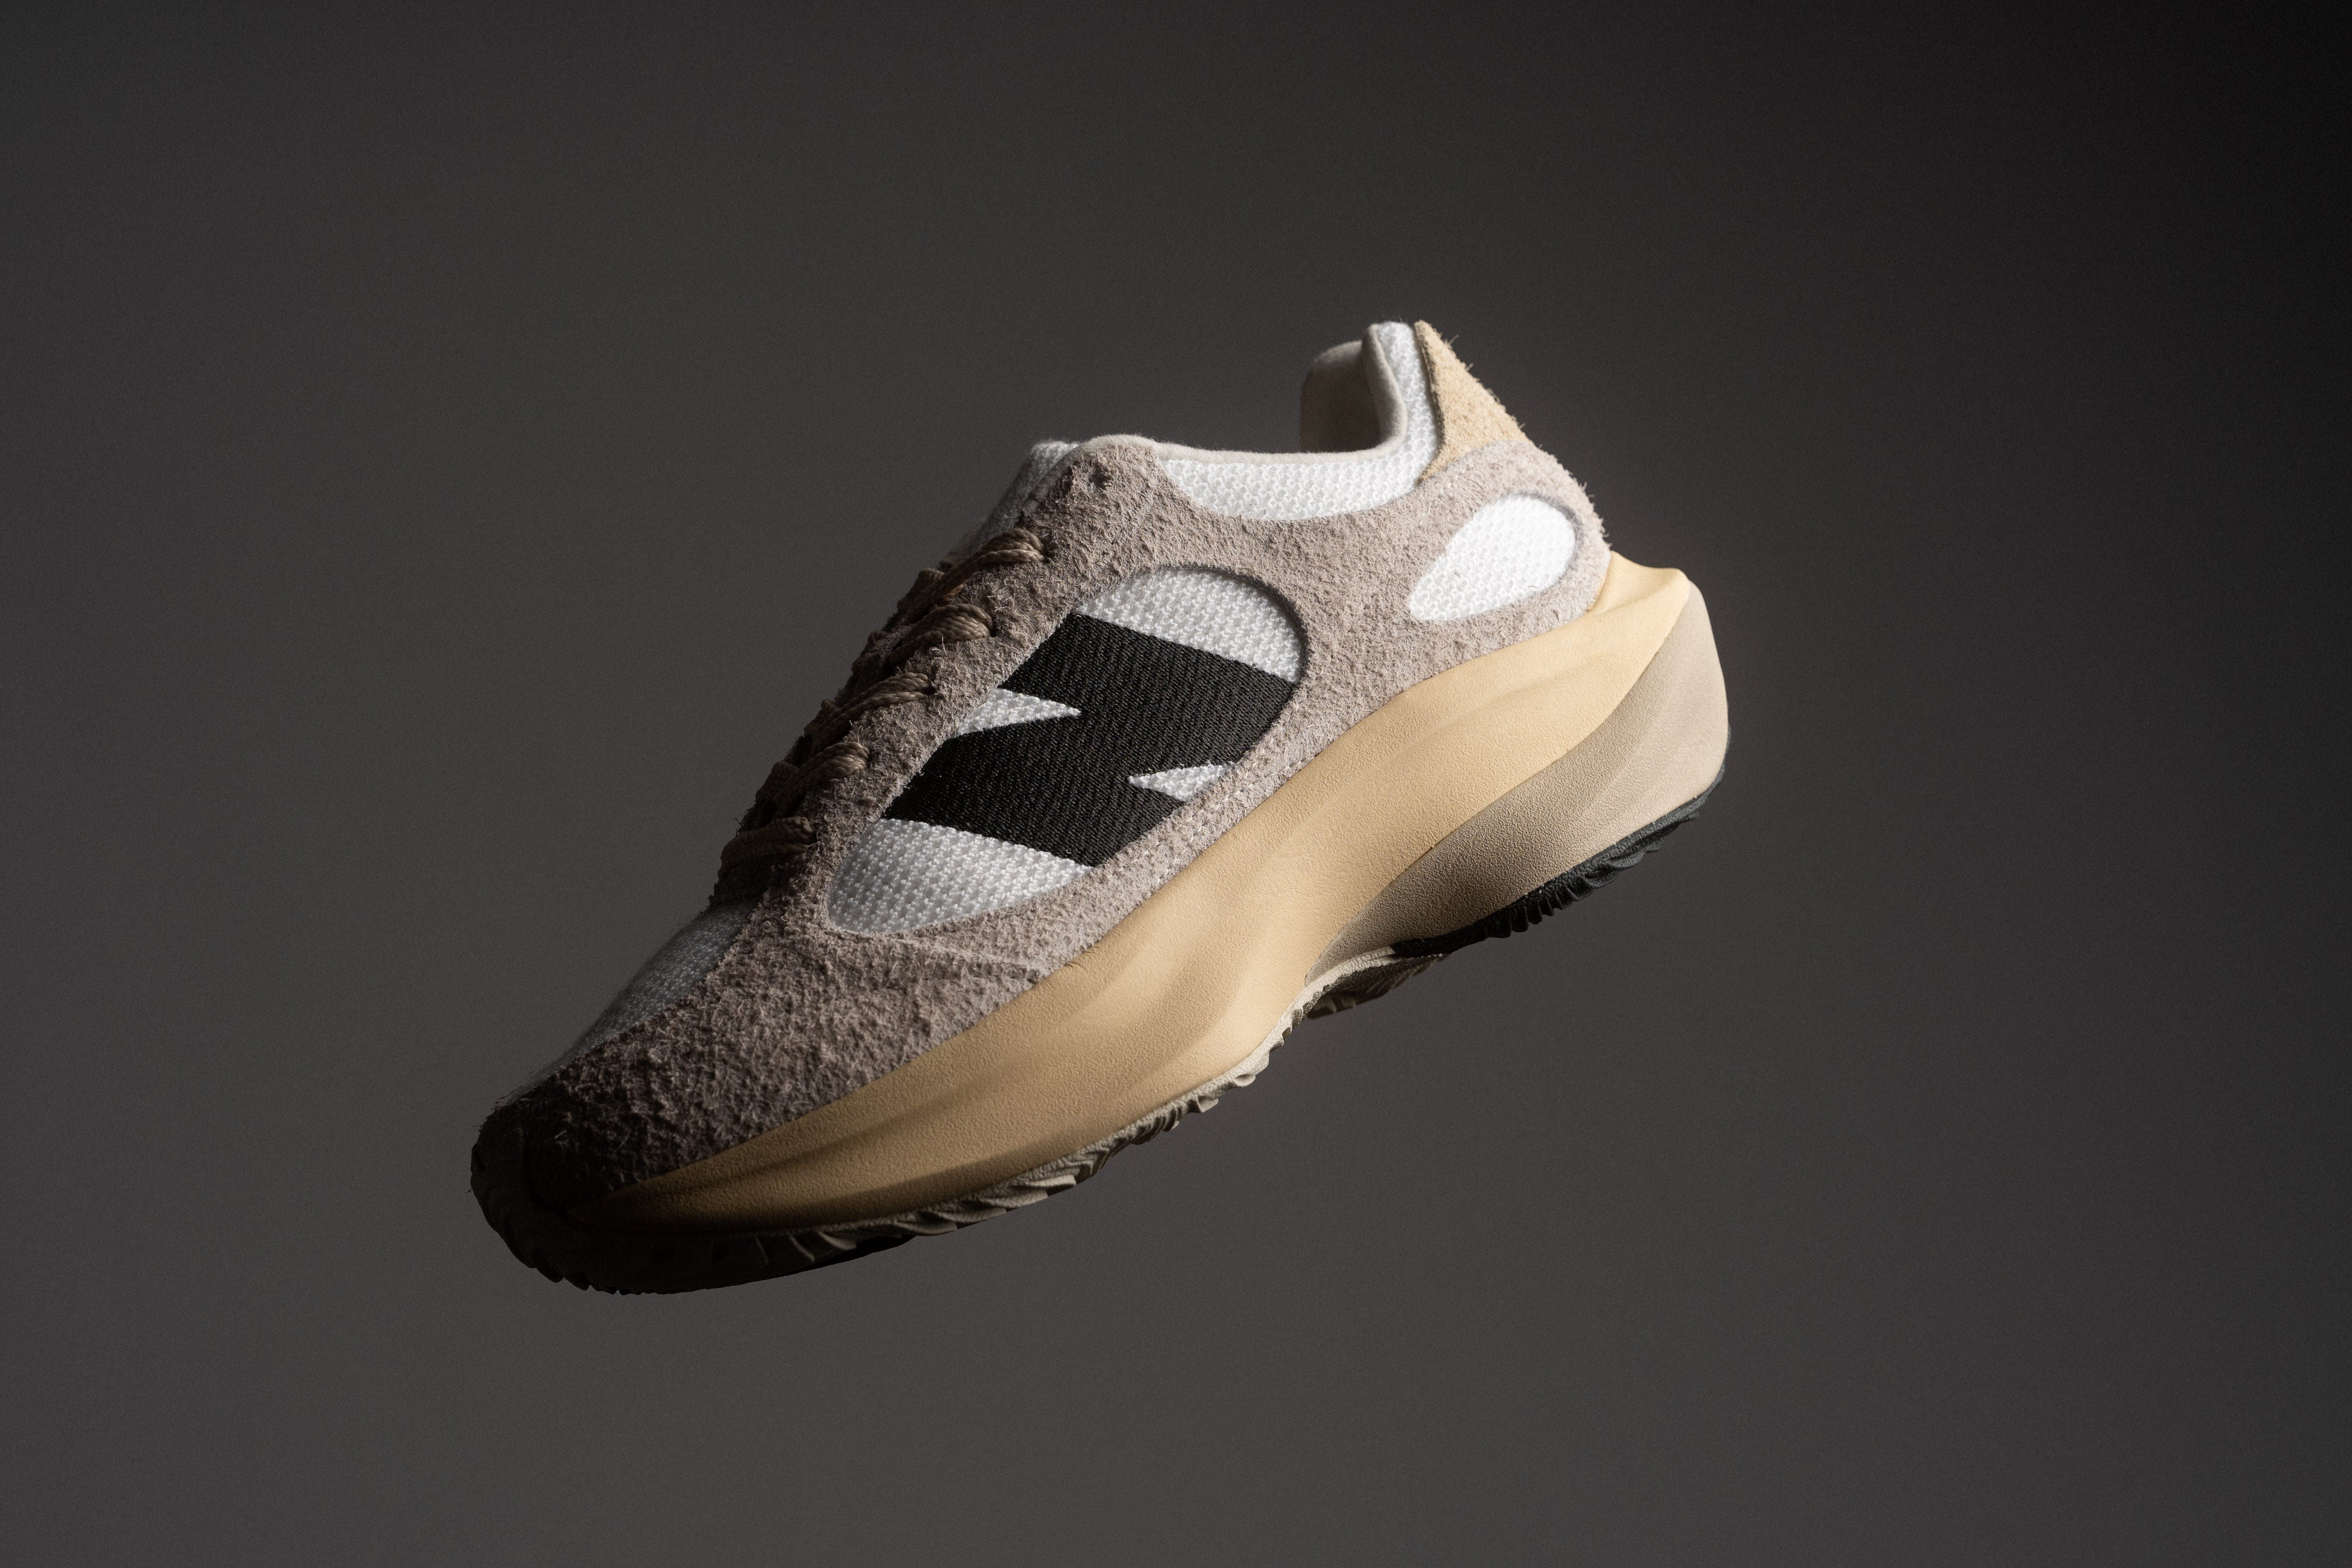 Brand Jordans in-line sneaker draws inspiration from the